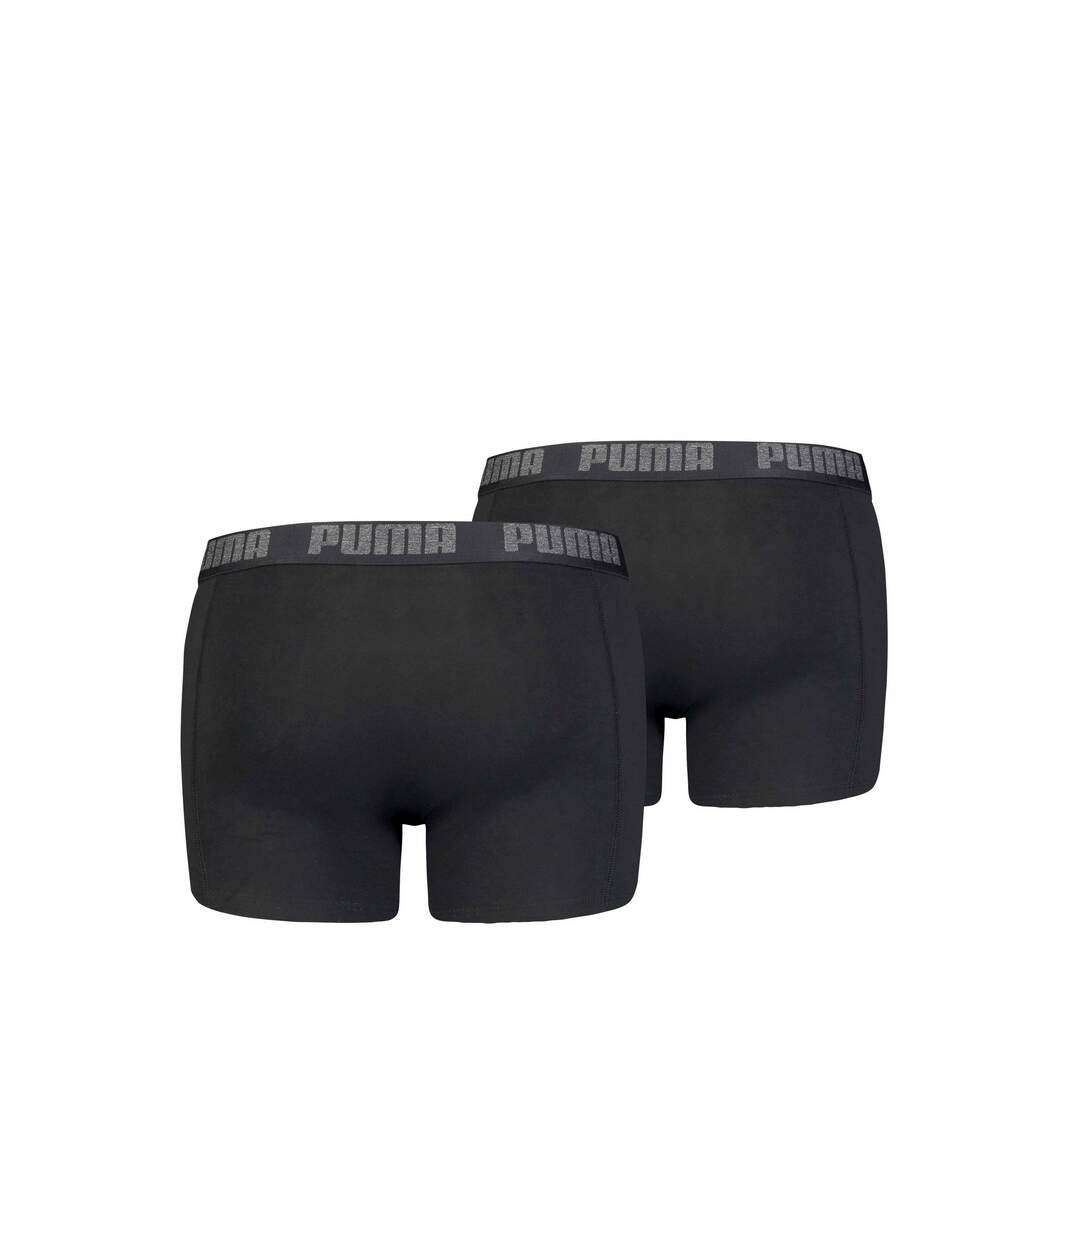 Puma Mens Basic Boxer Shorts (Pack of 2) (Black)